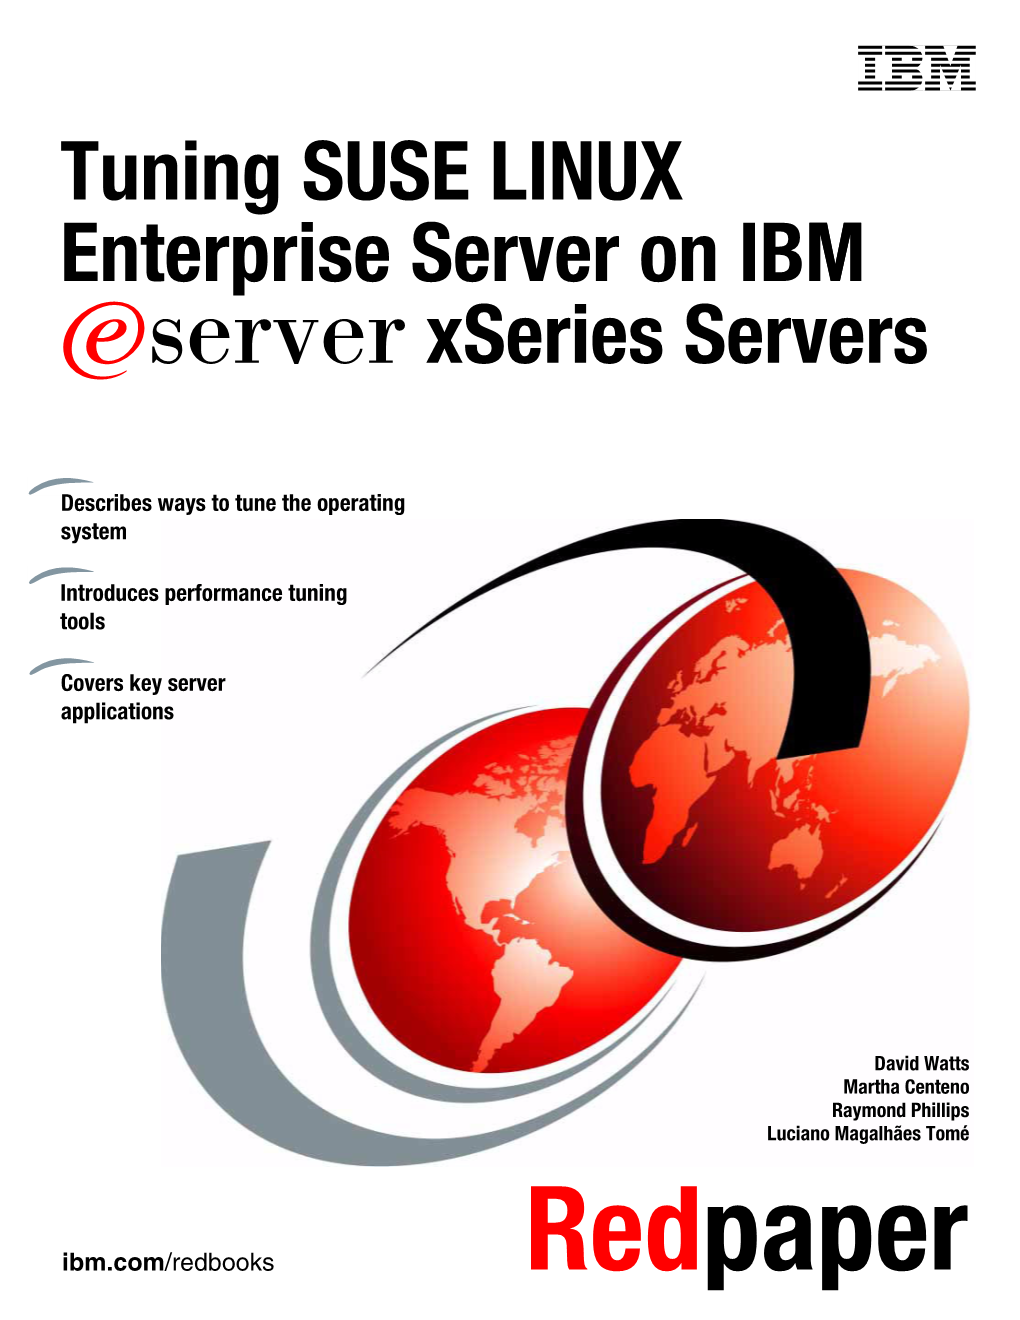 Tuning SUSE LINUX Enterprise Server on IBM Eserver Xseries Servers